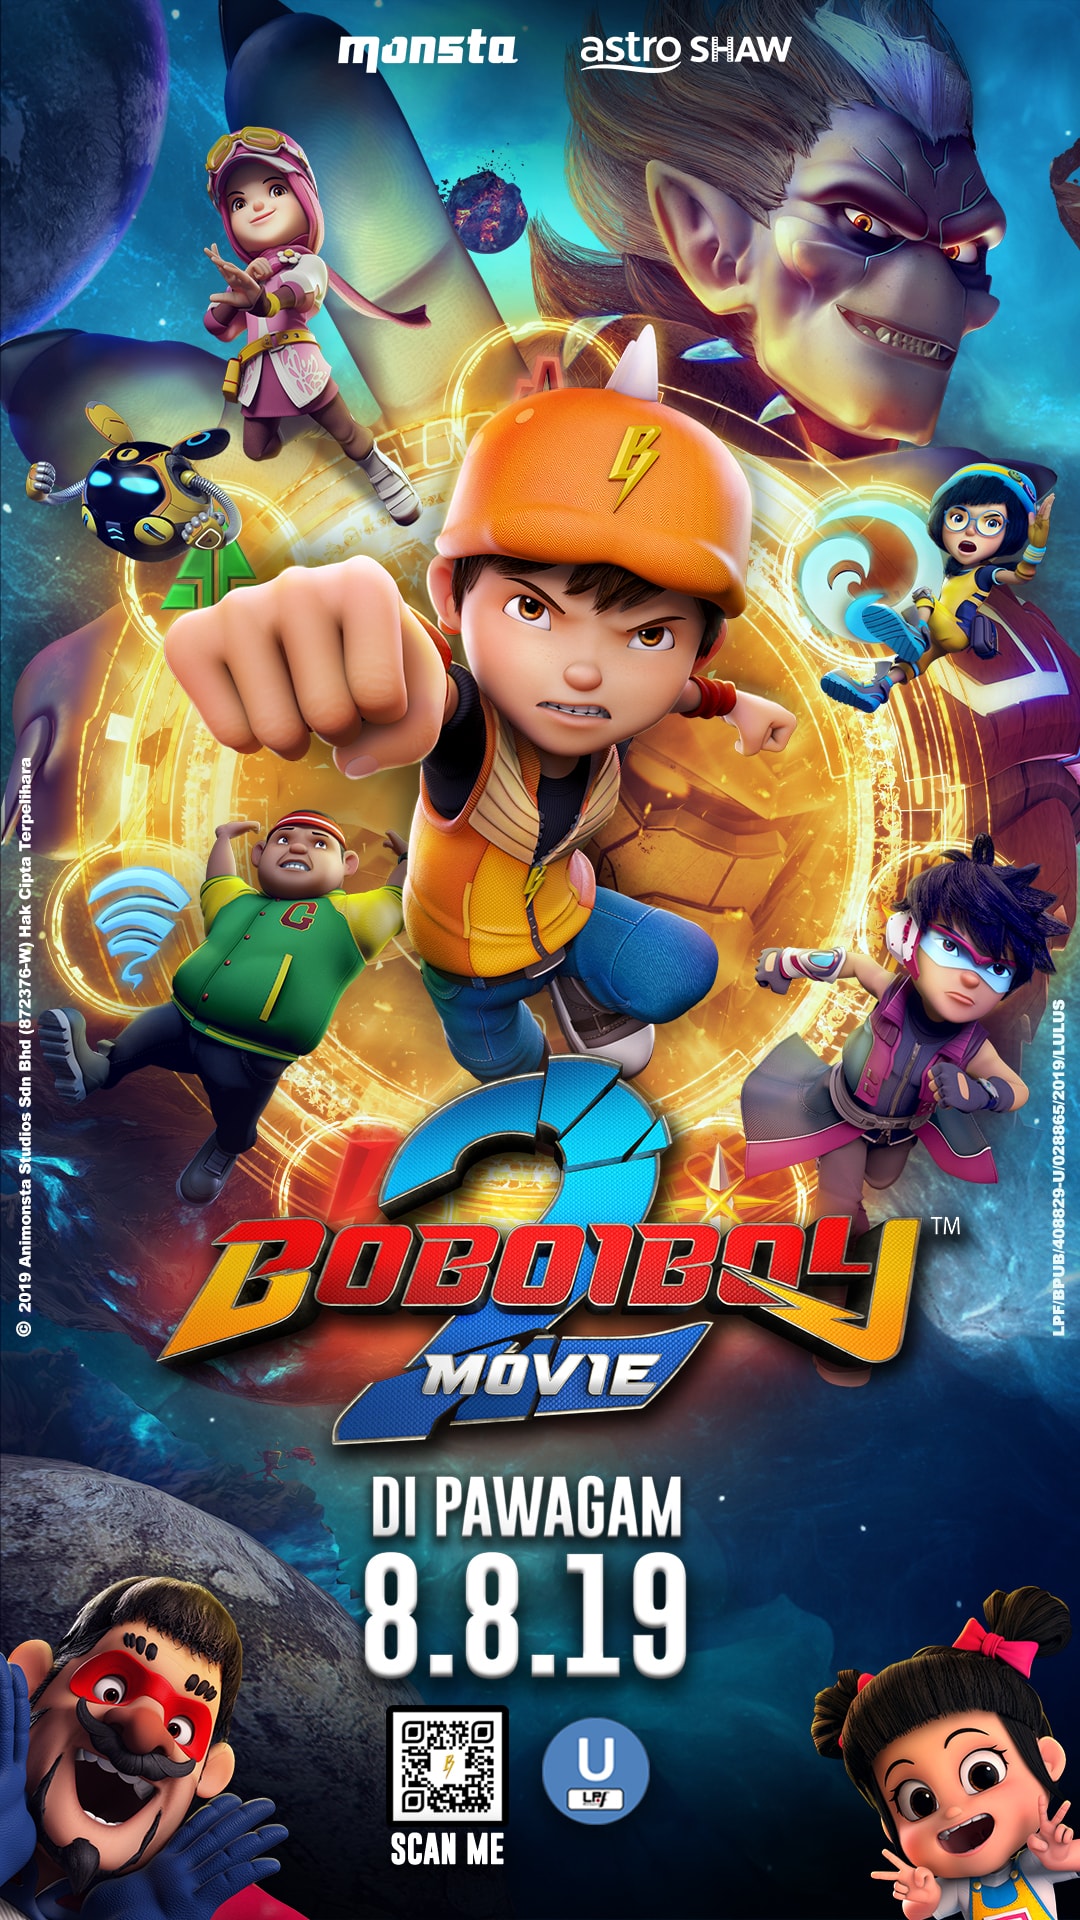 Boboiboy Movie 2 8 August 2019 Finas